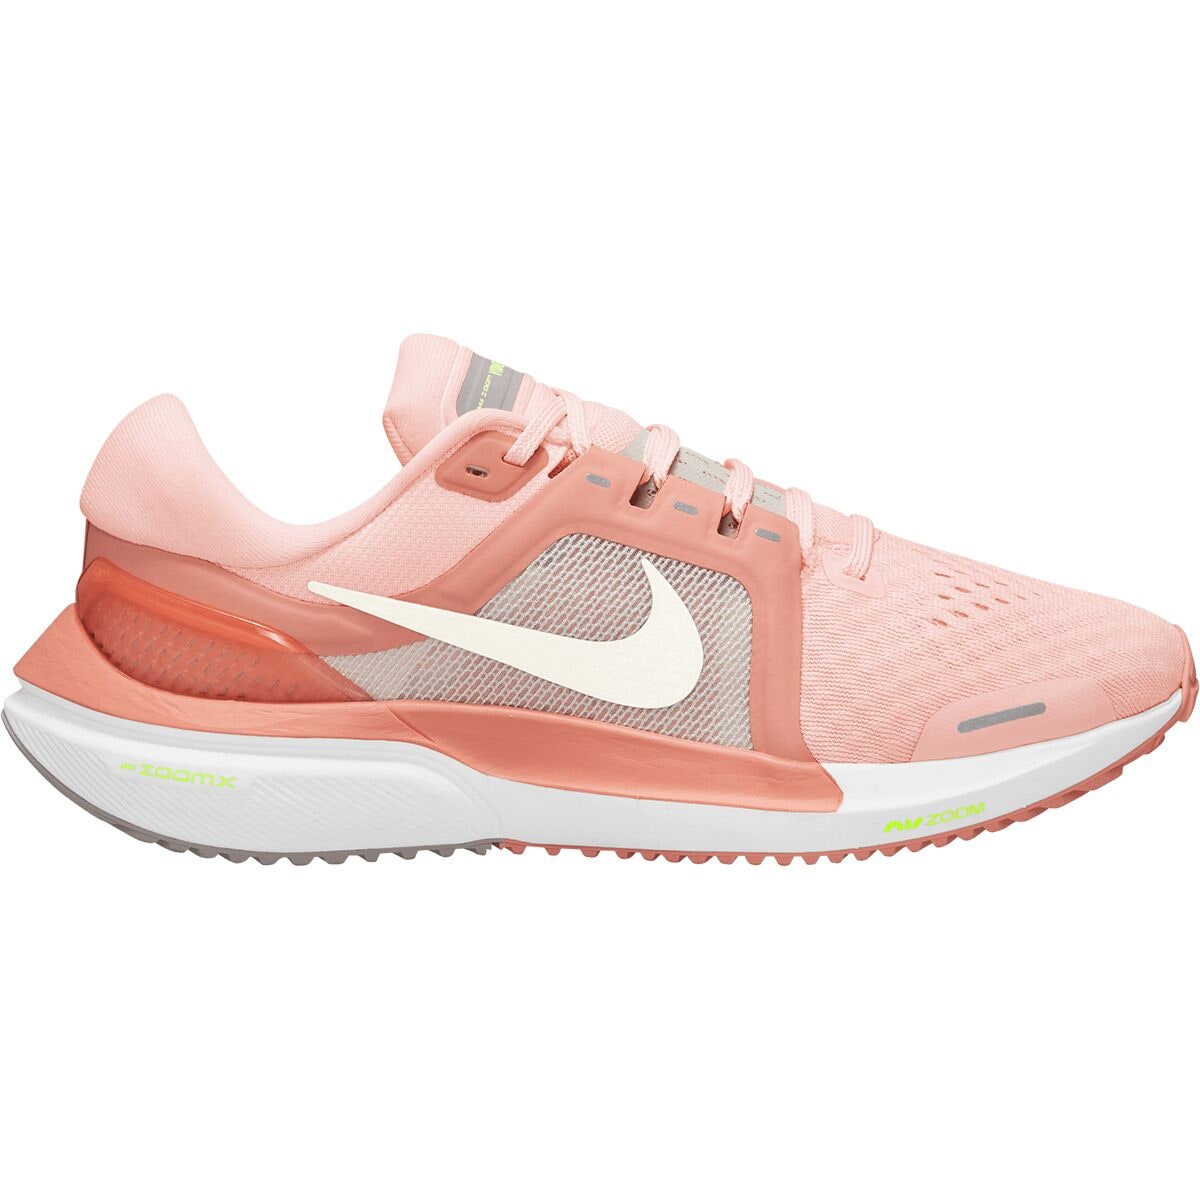 Nike Air Zoom Vomero 16 Running Shoe - Women's - Footwear